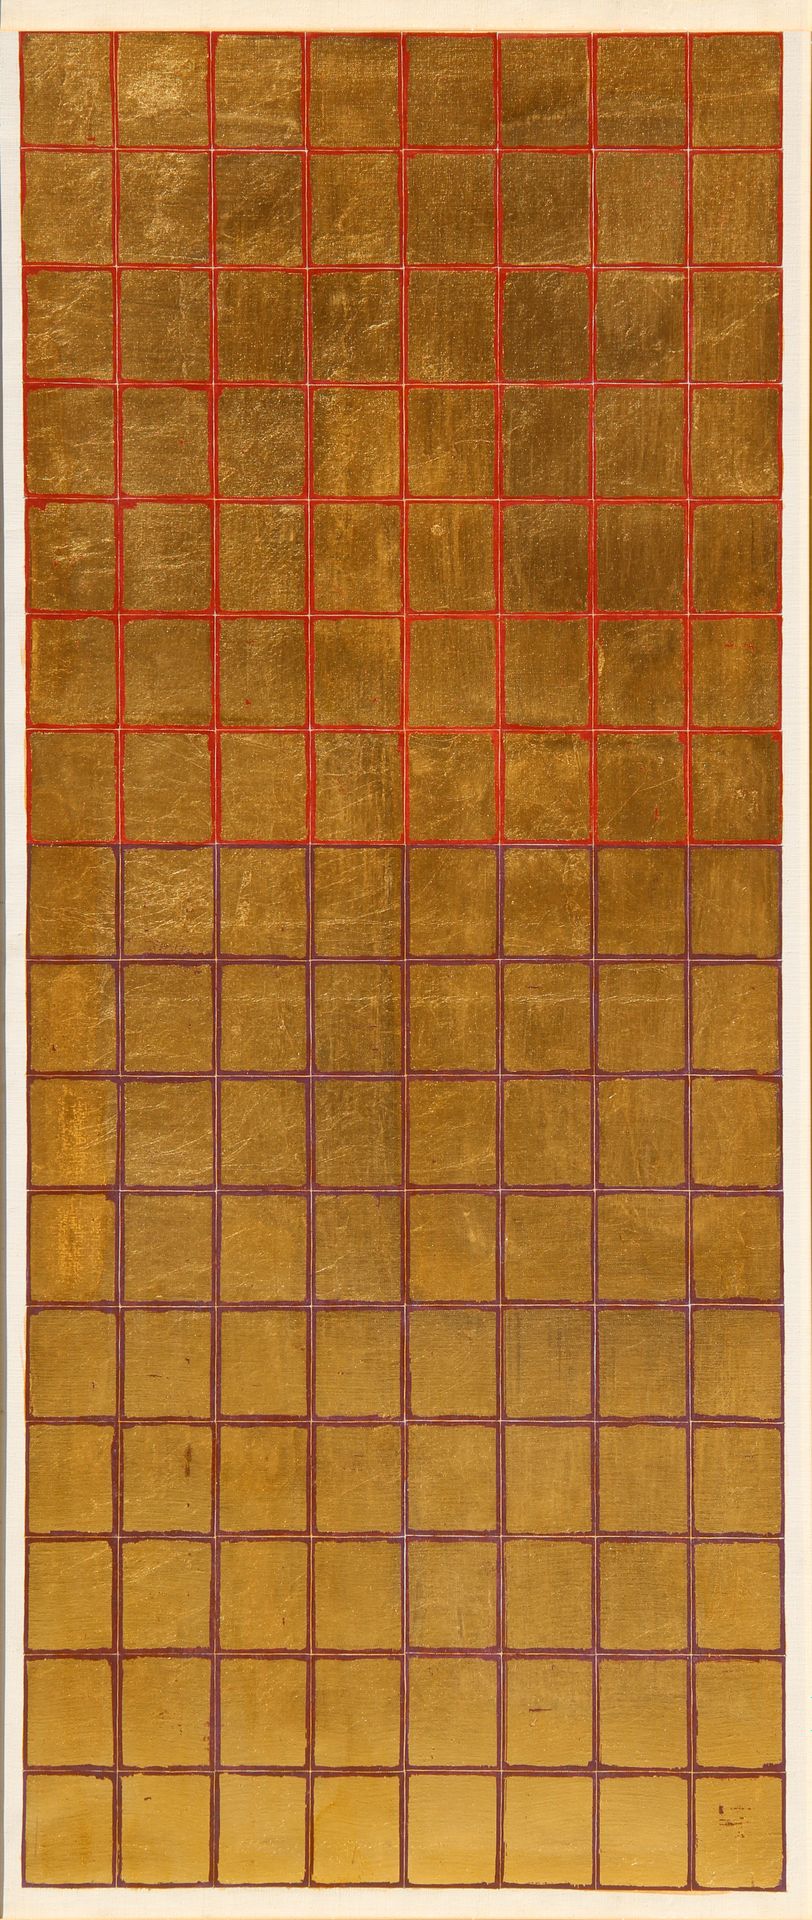 Remo BIANCO Tableau doré Años 80, acrílico sobre lienzo, cm. 120x50

Obra regist&hellip;